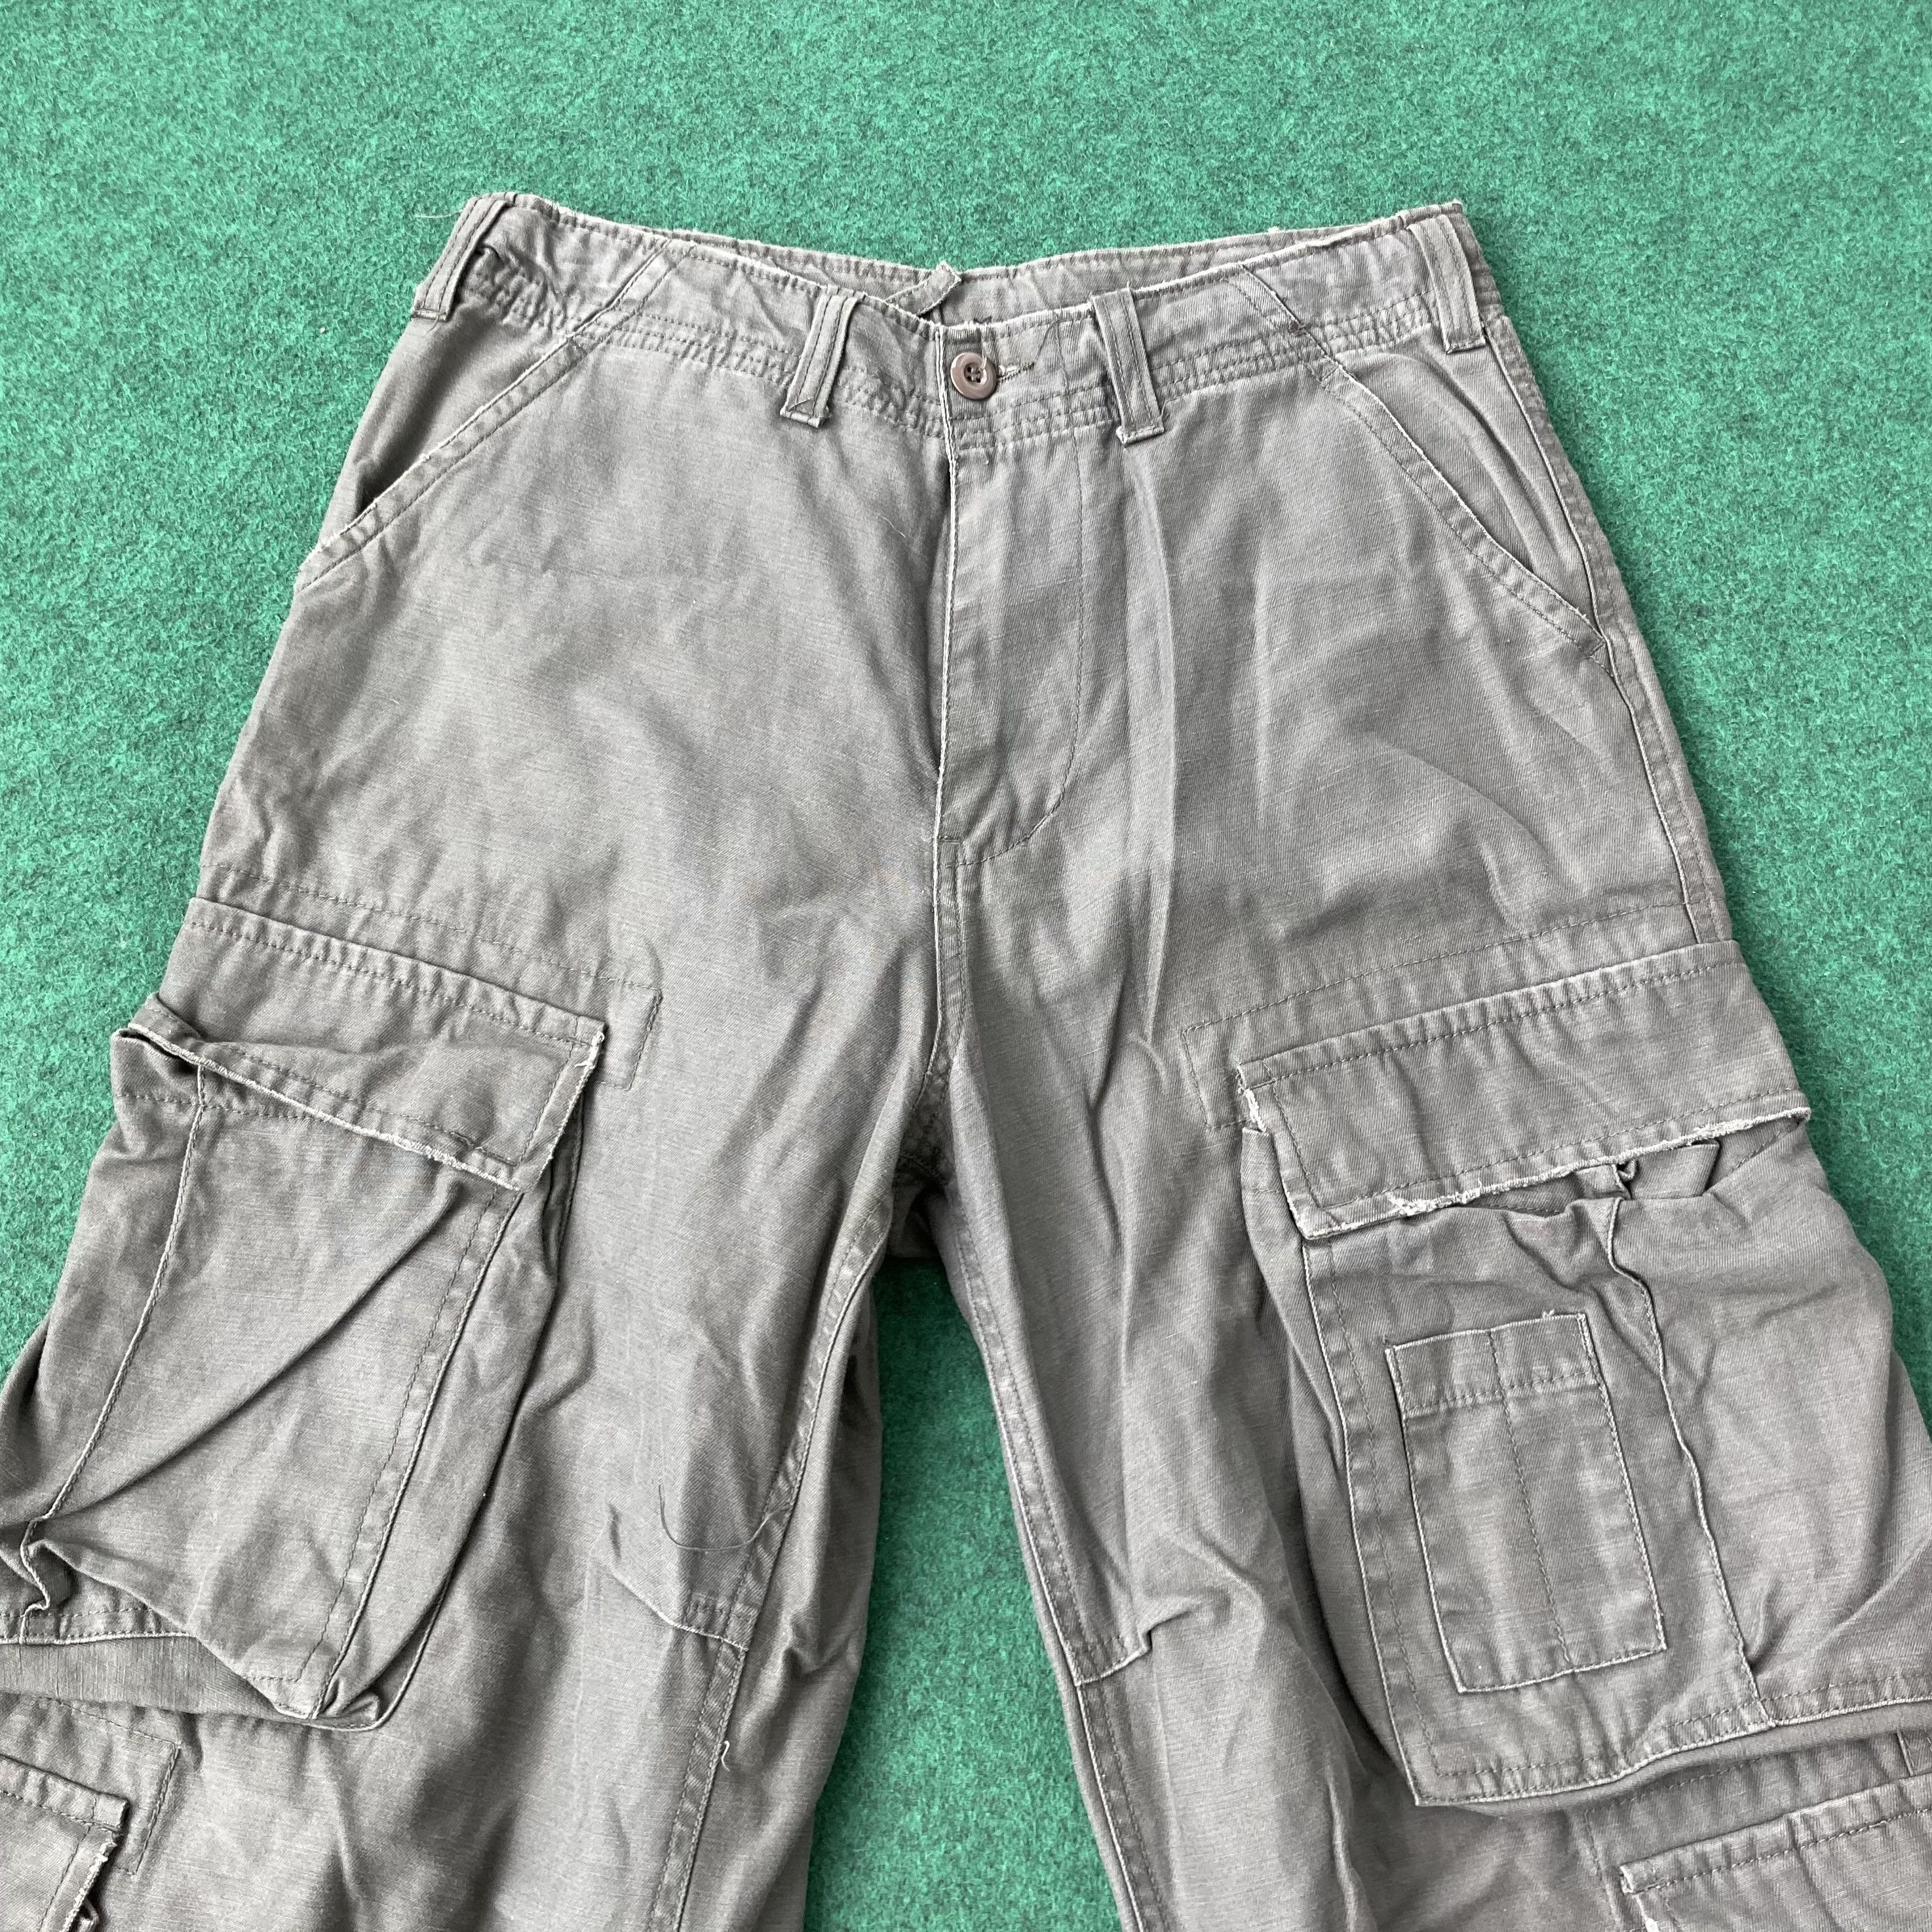 Japanese Brand BcBs Military Style Pocket Design Pant Hip HOp Jeans Size US 29 - 3 Thumbnail